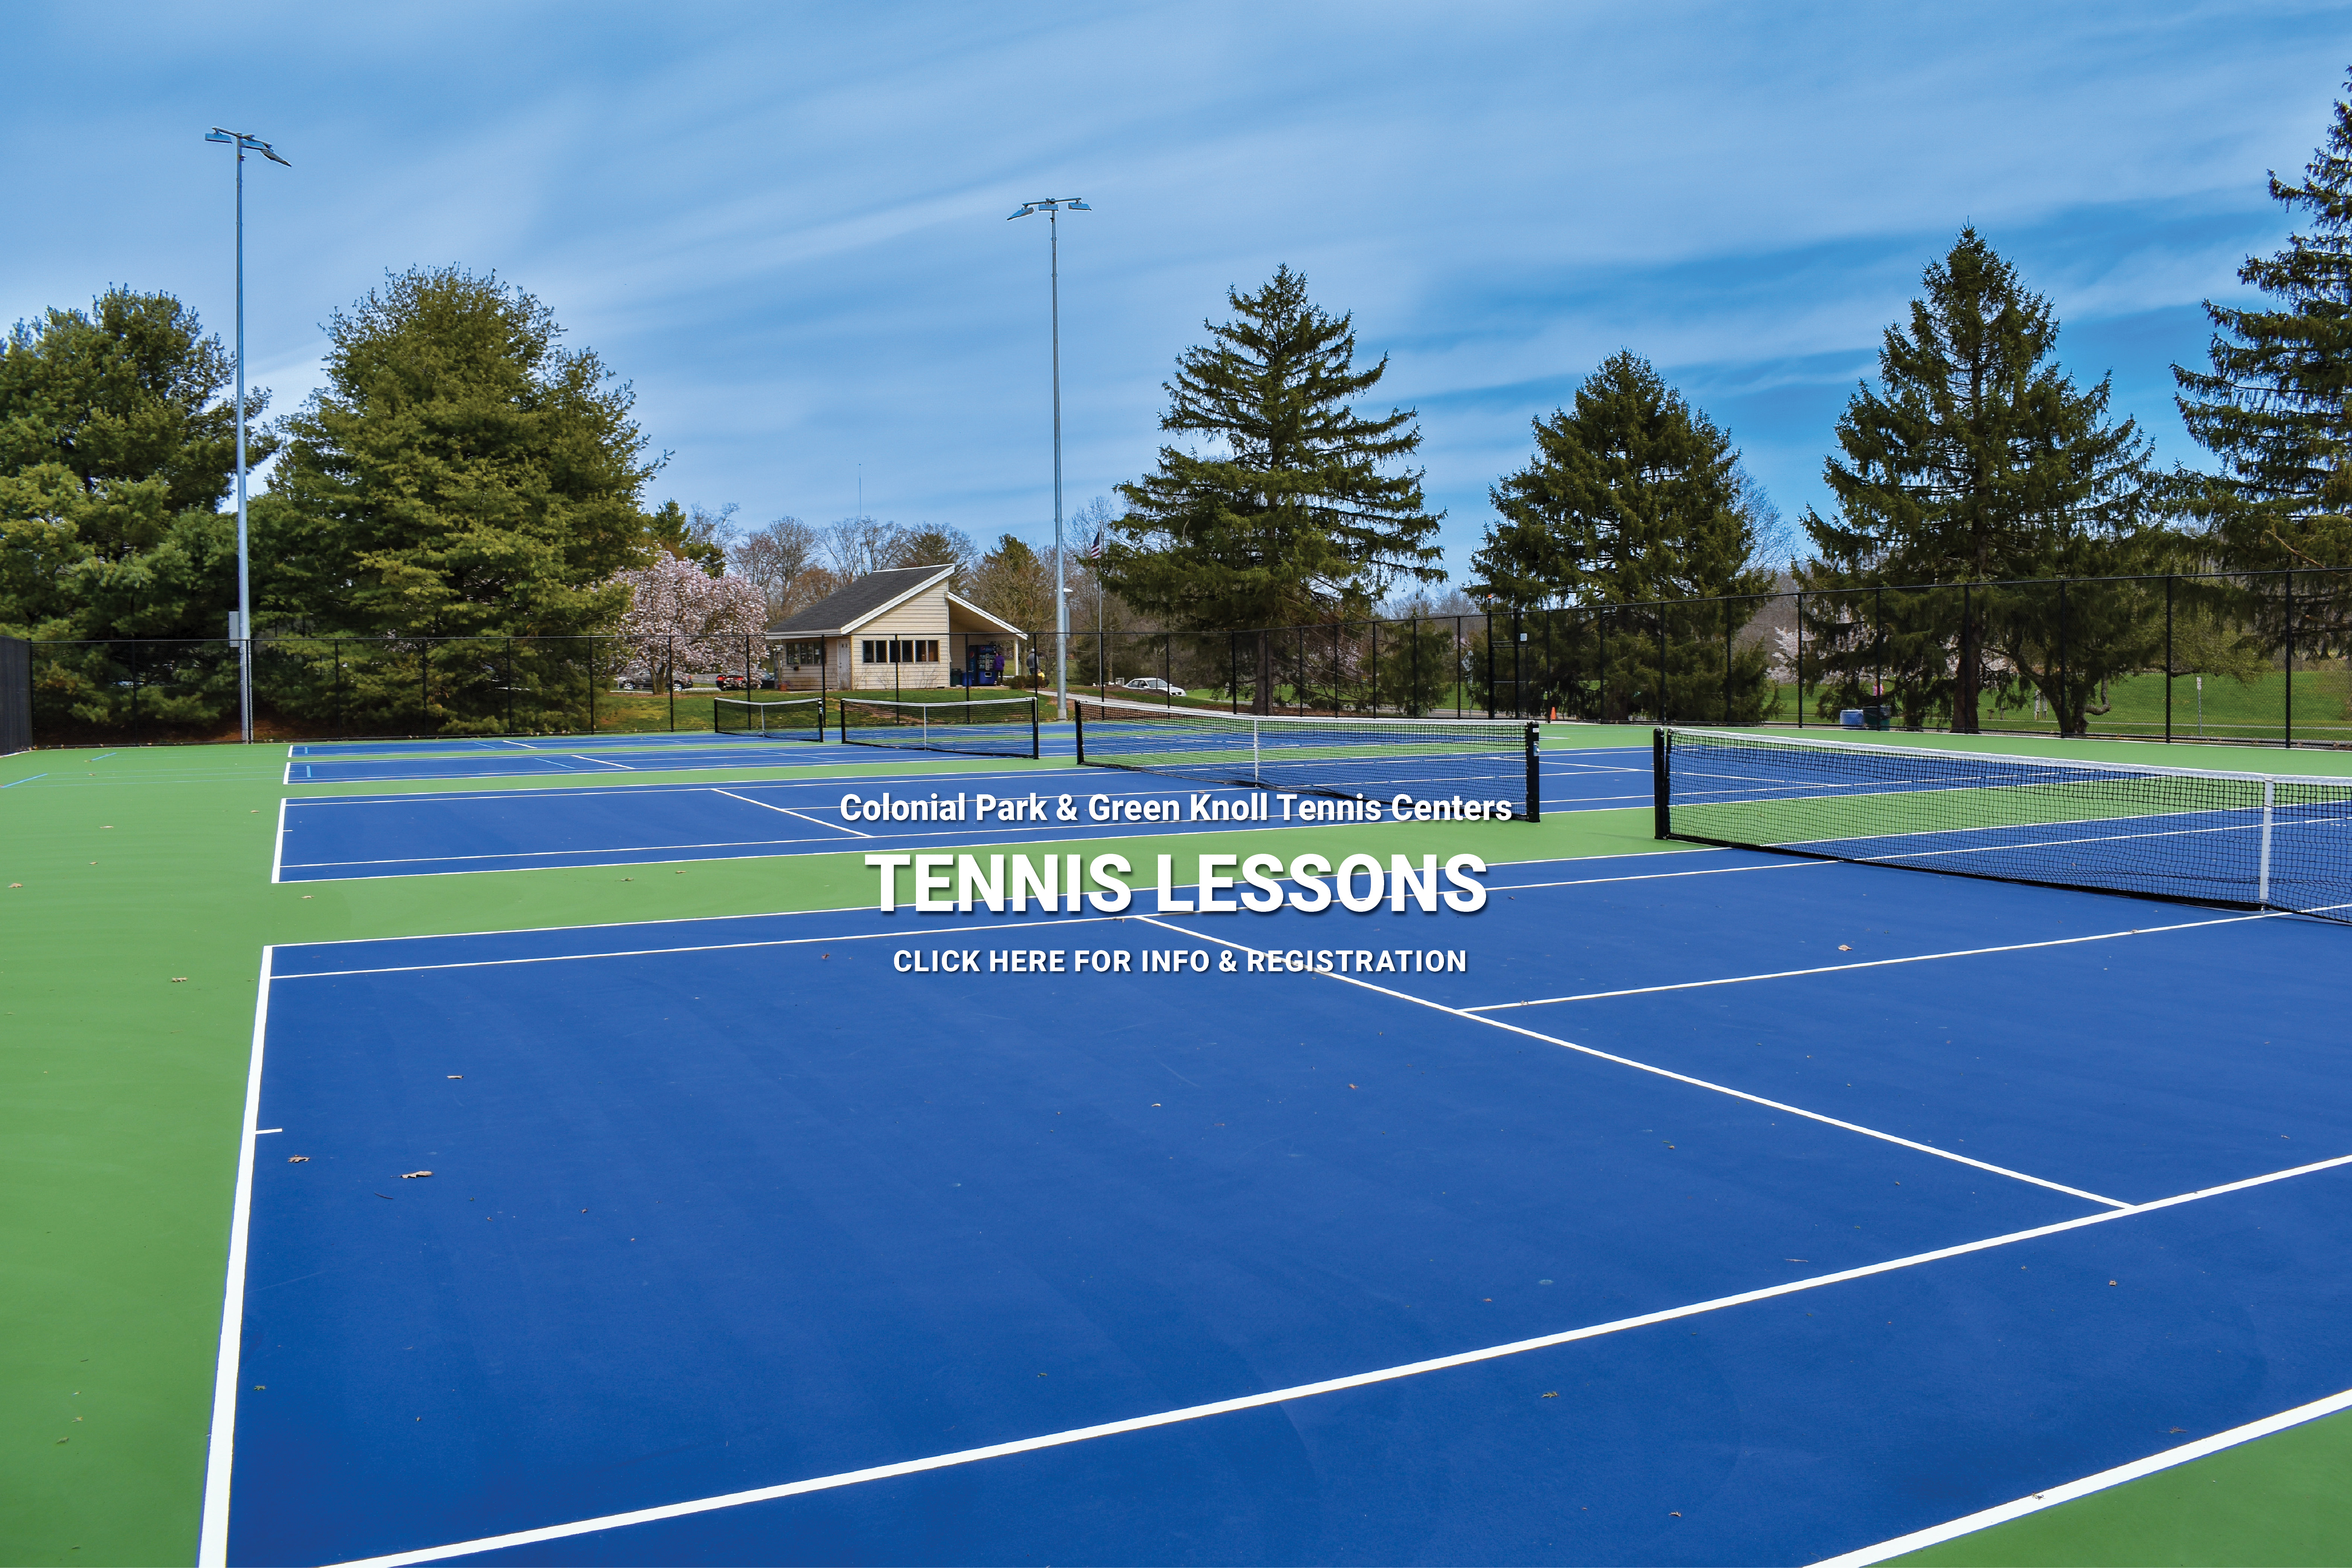 Tennis Lessons Registration